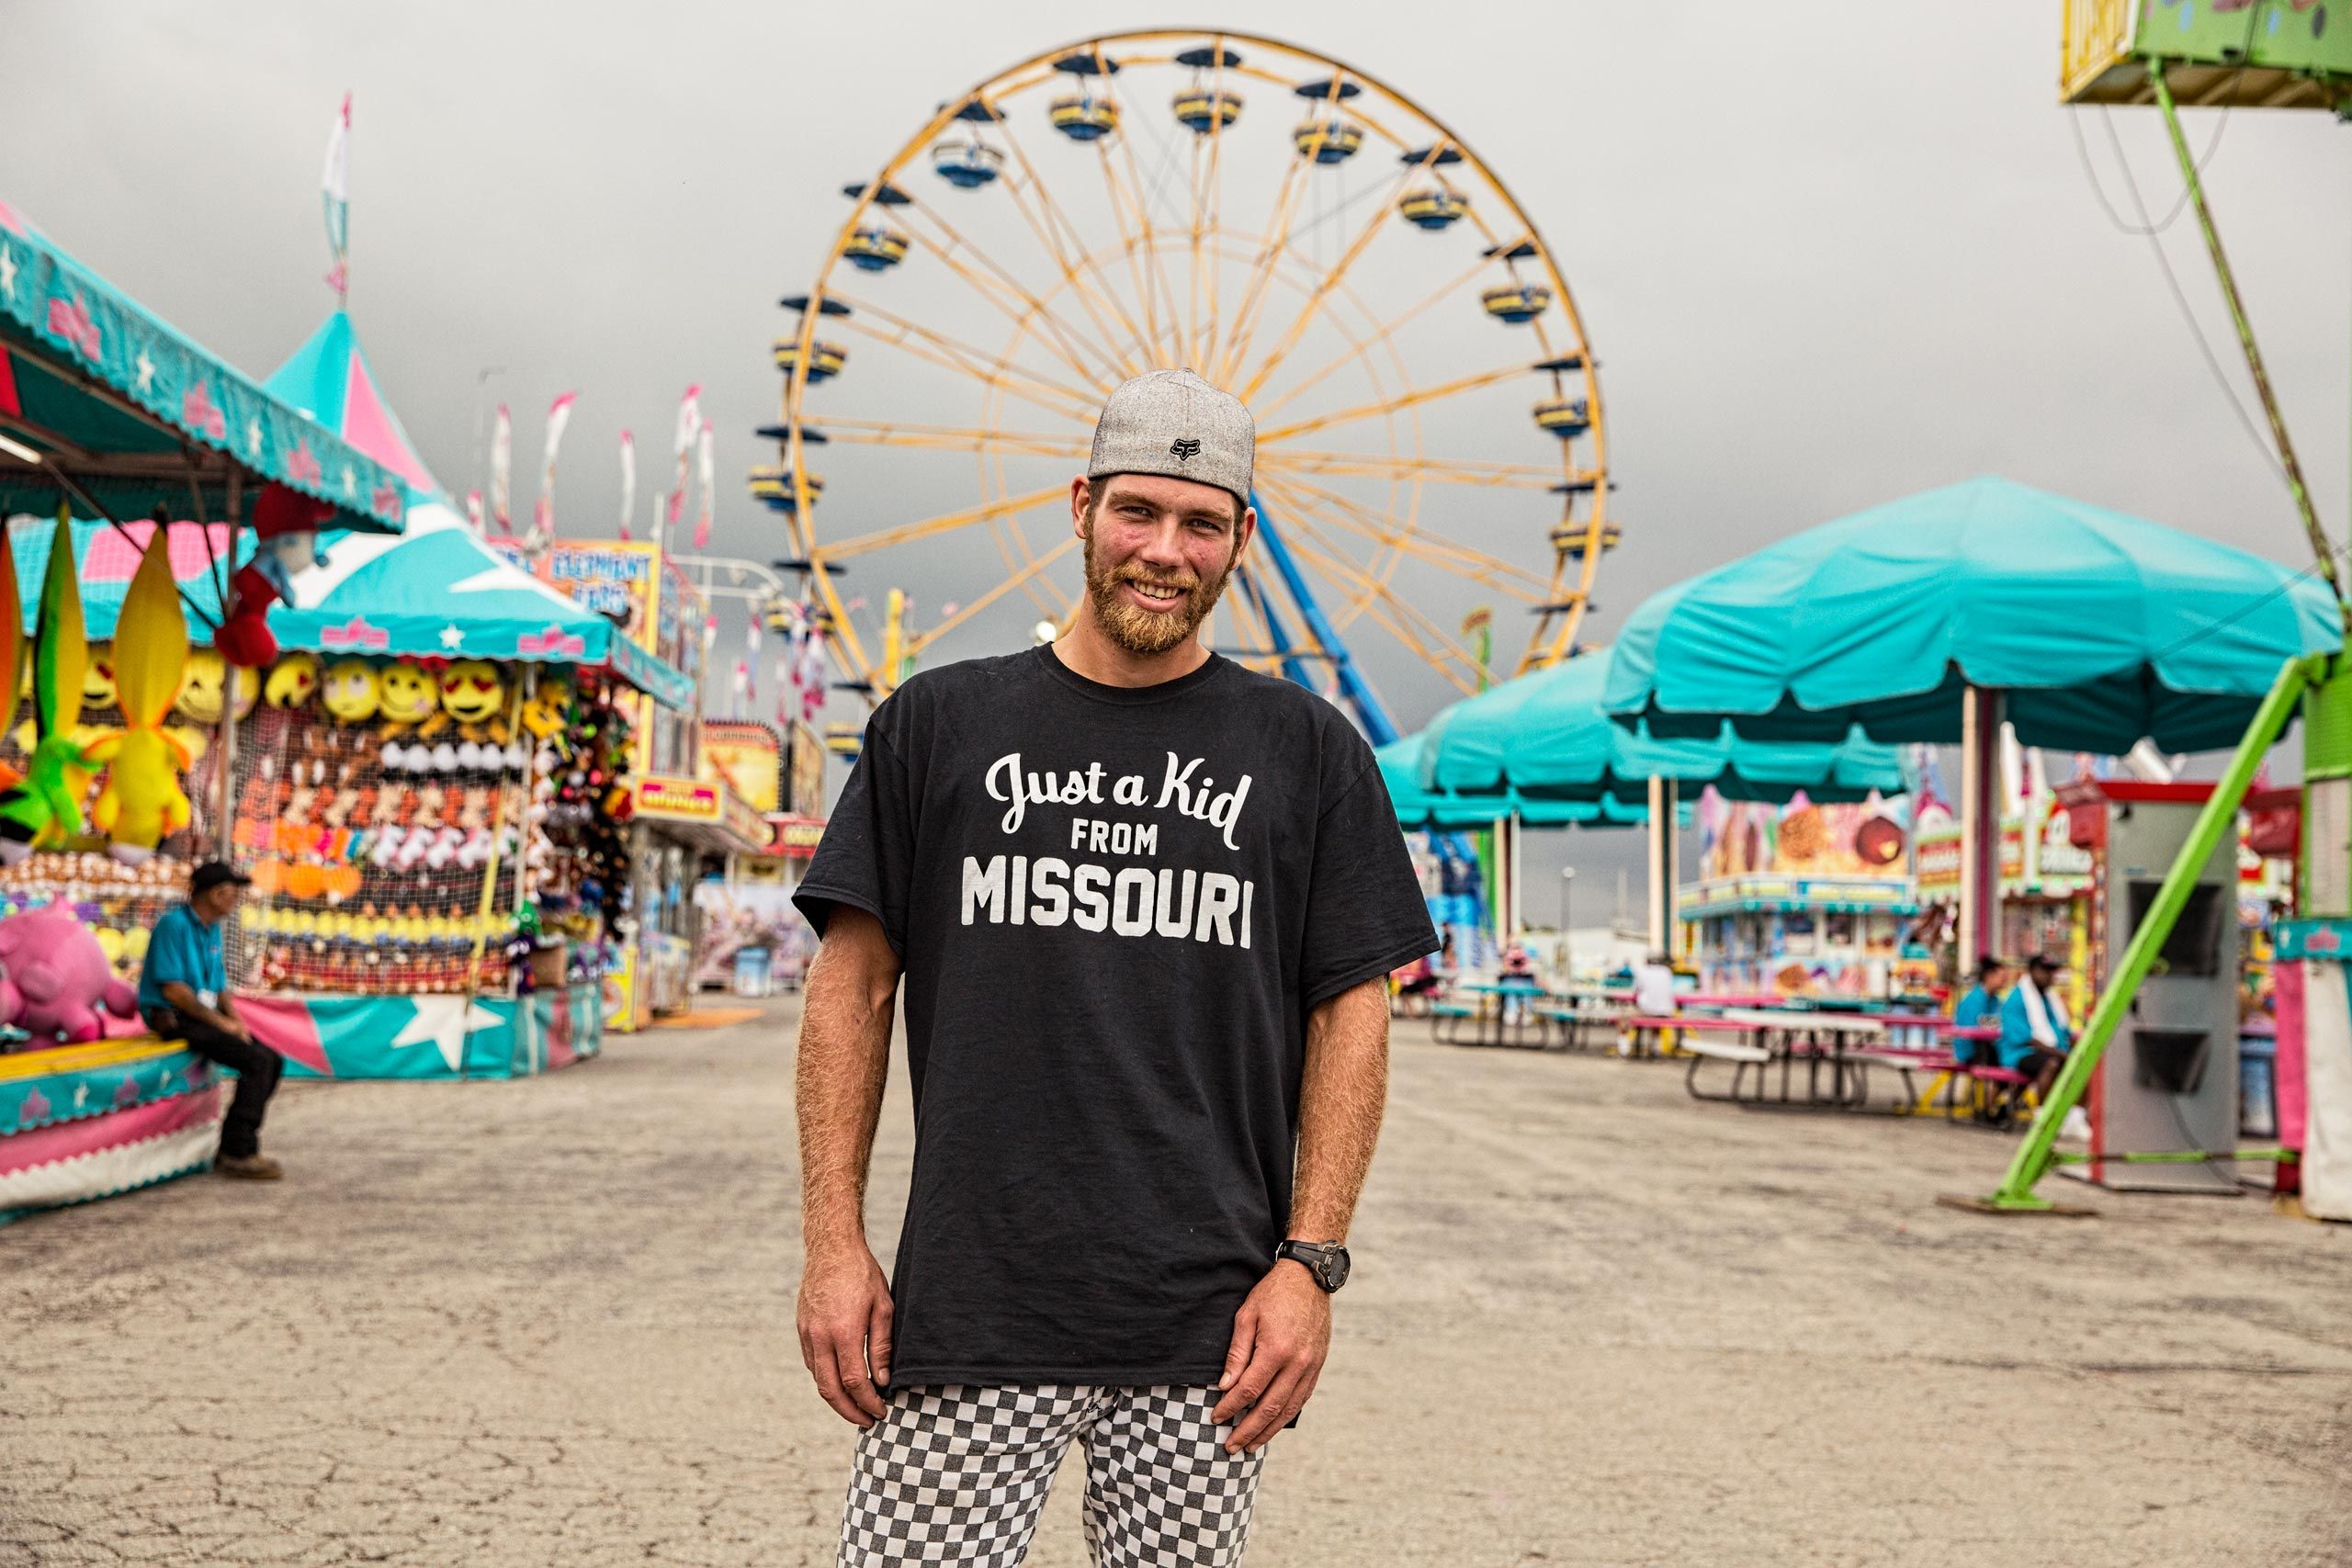 Man At a Fair Wearing "Just A Kid From Missouri" T-Shirt